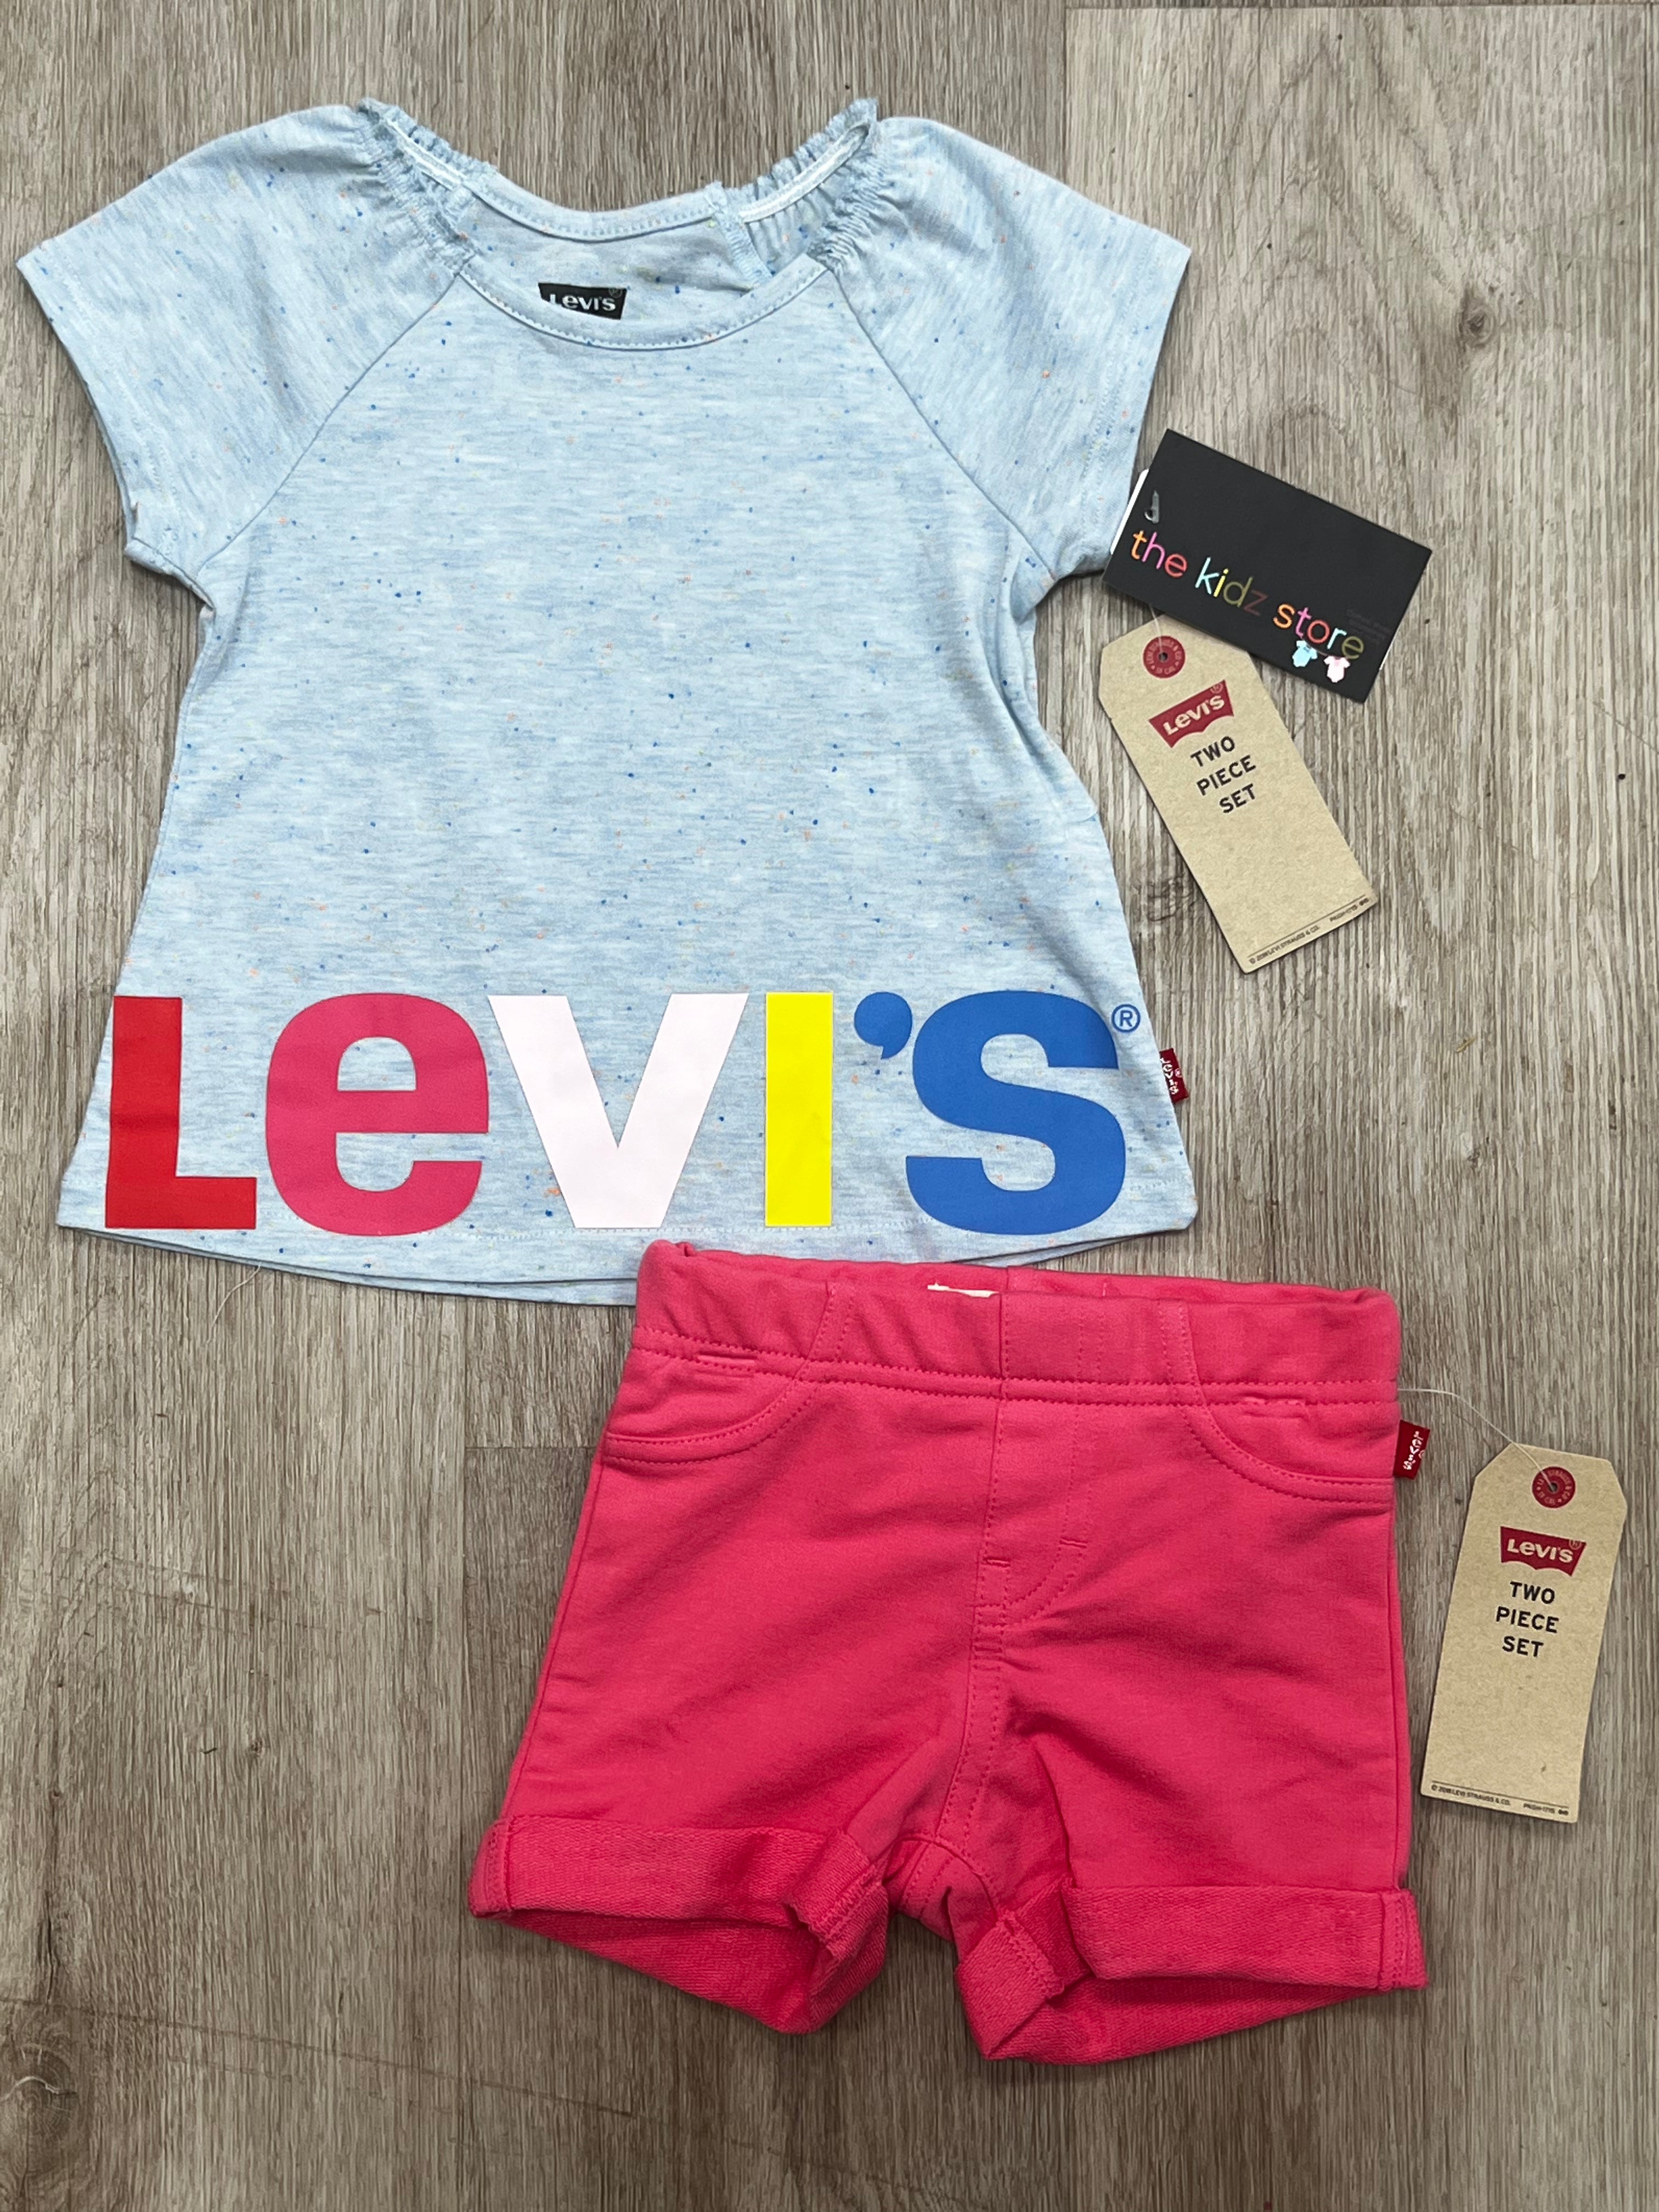 Levi's Rainbow Short Set| The Kidz Store Bloomfield